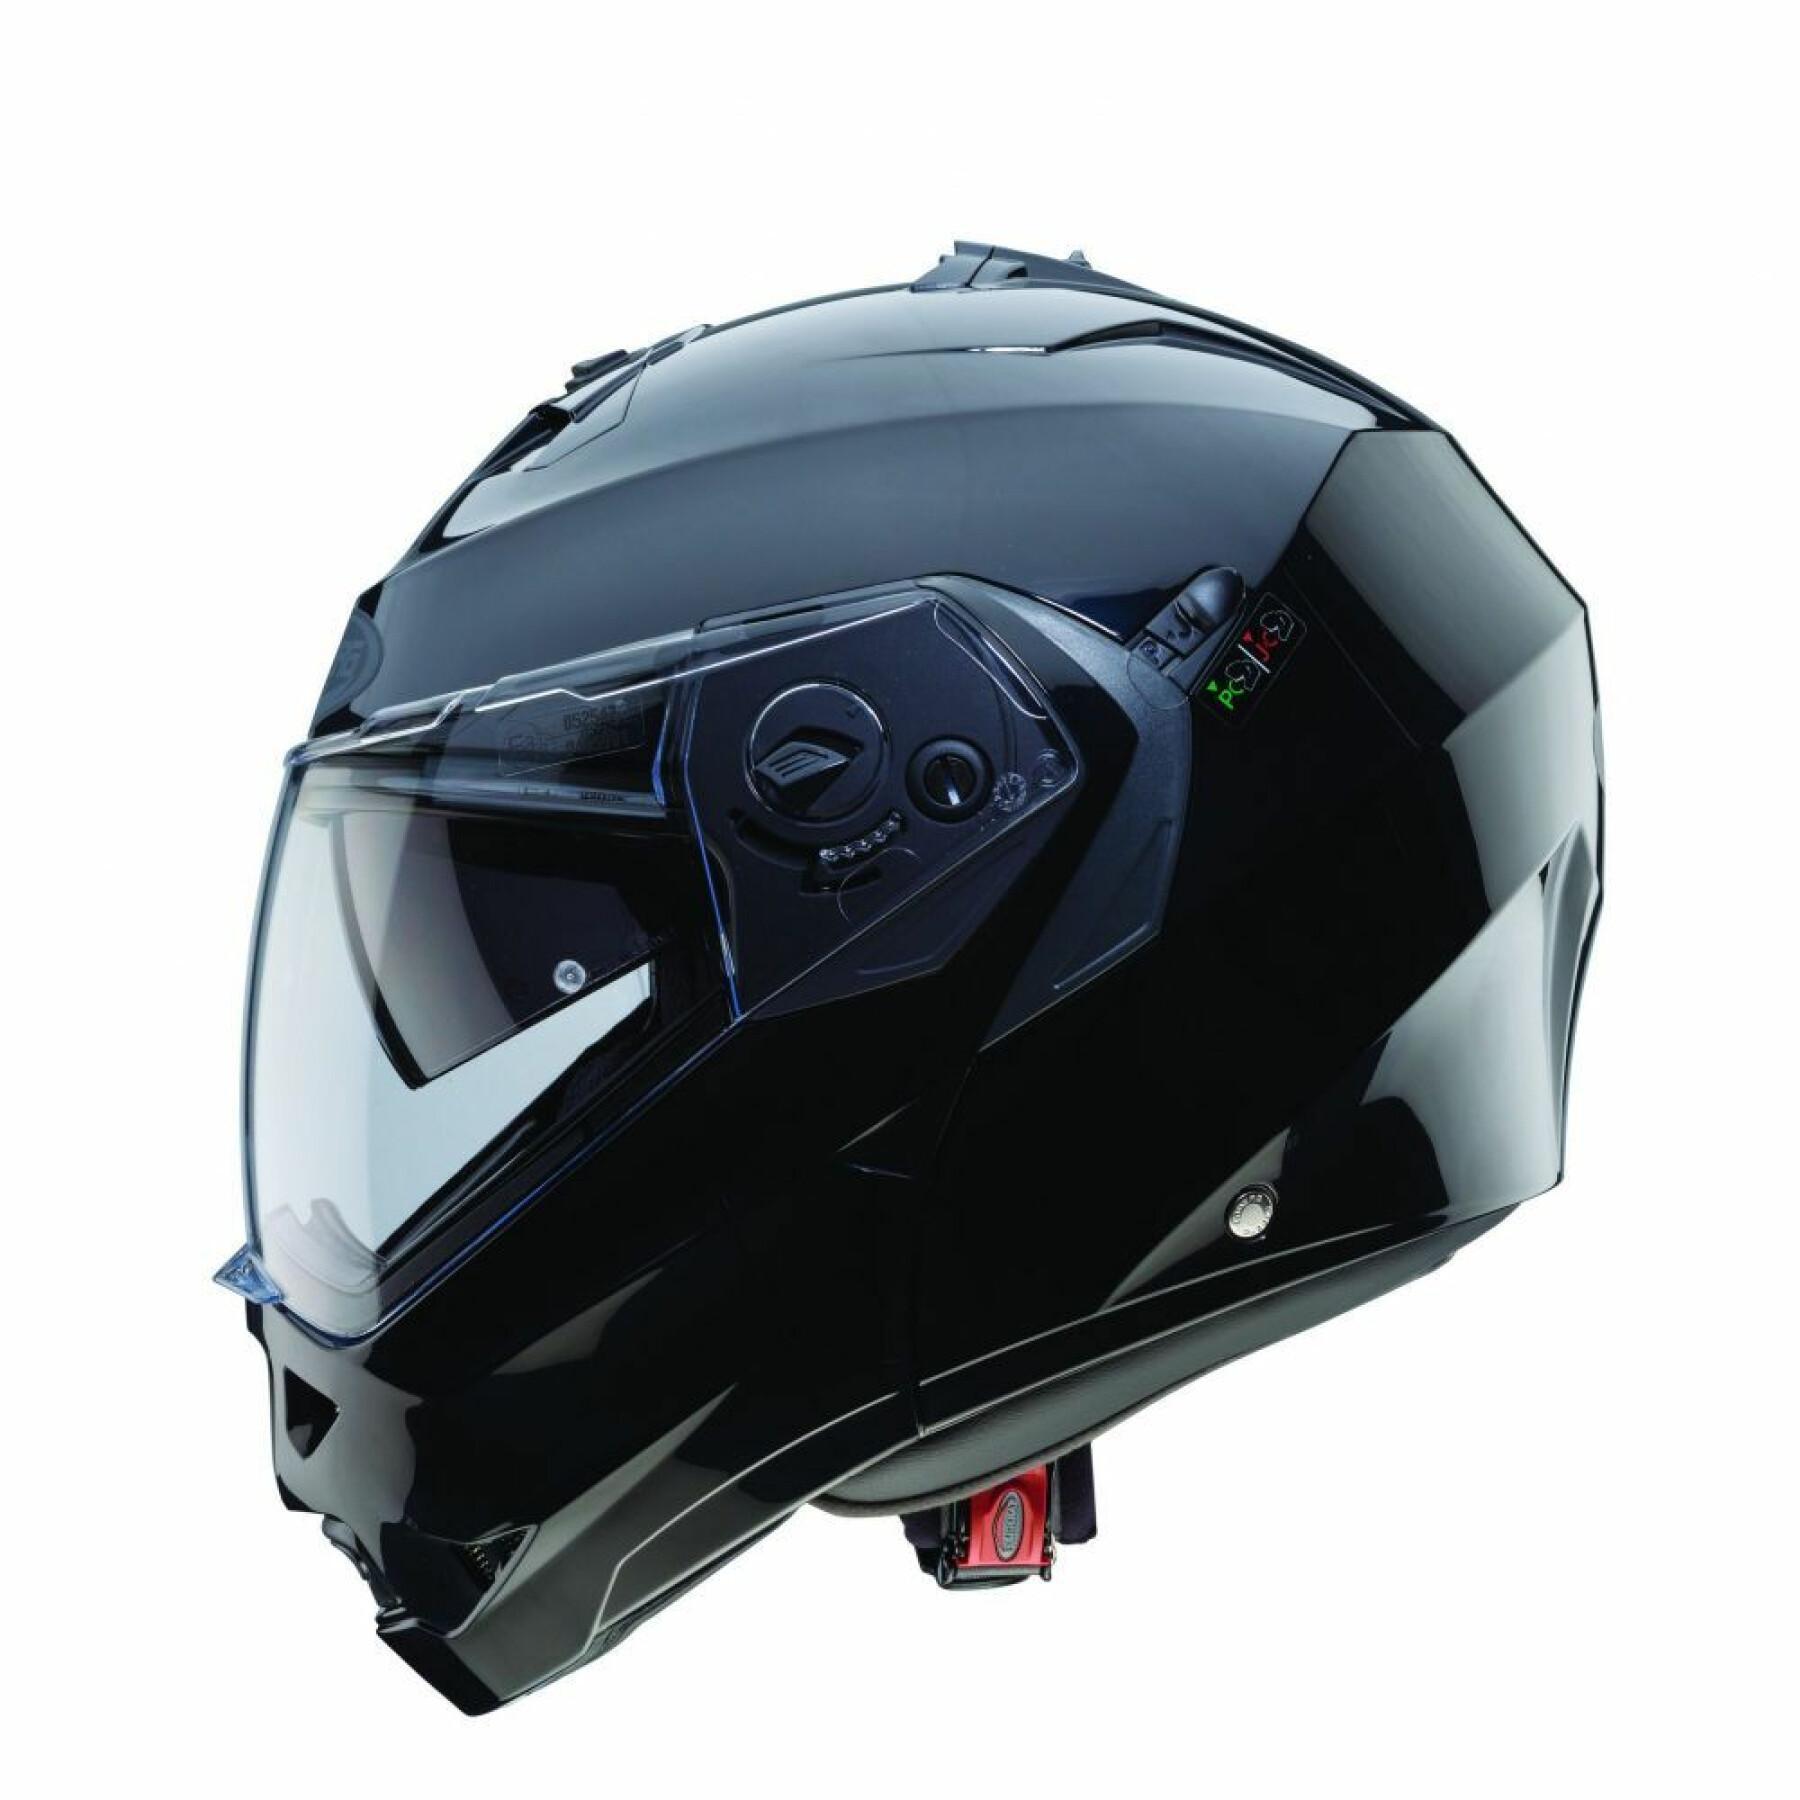 Modular motorcycle helmet Caberg duke II smart